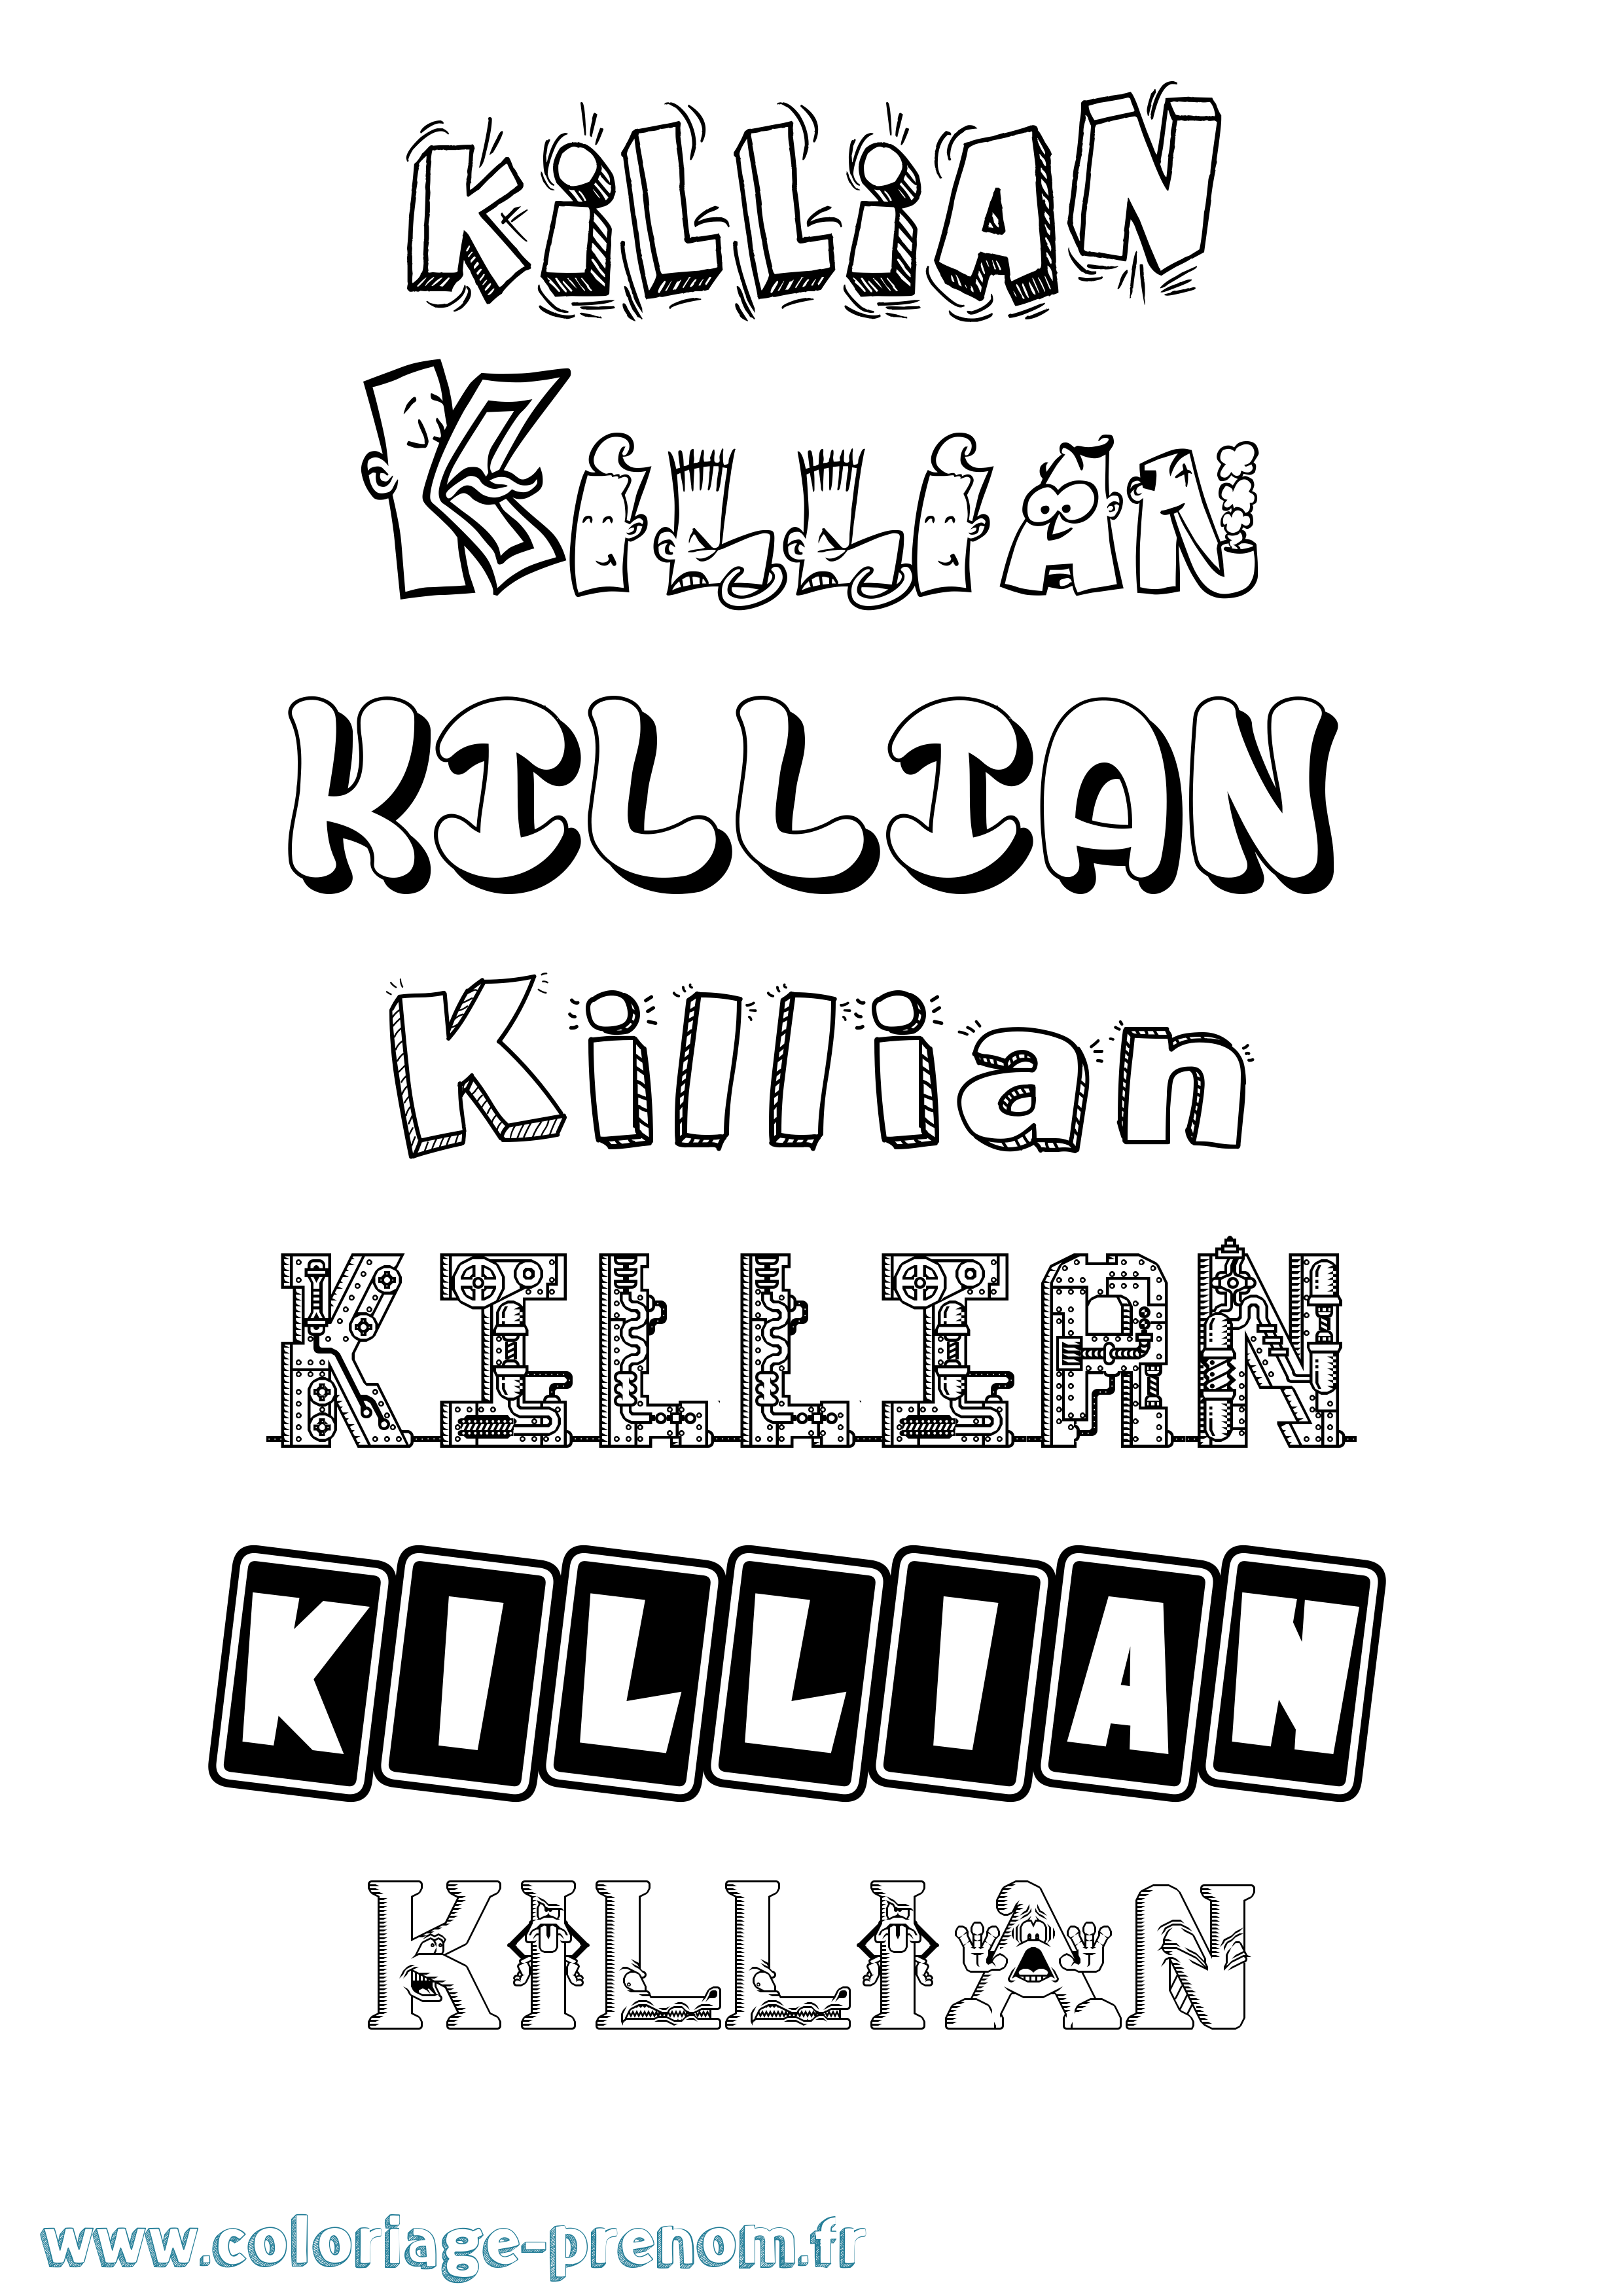 Coloriage prénom Killian